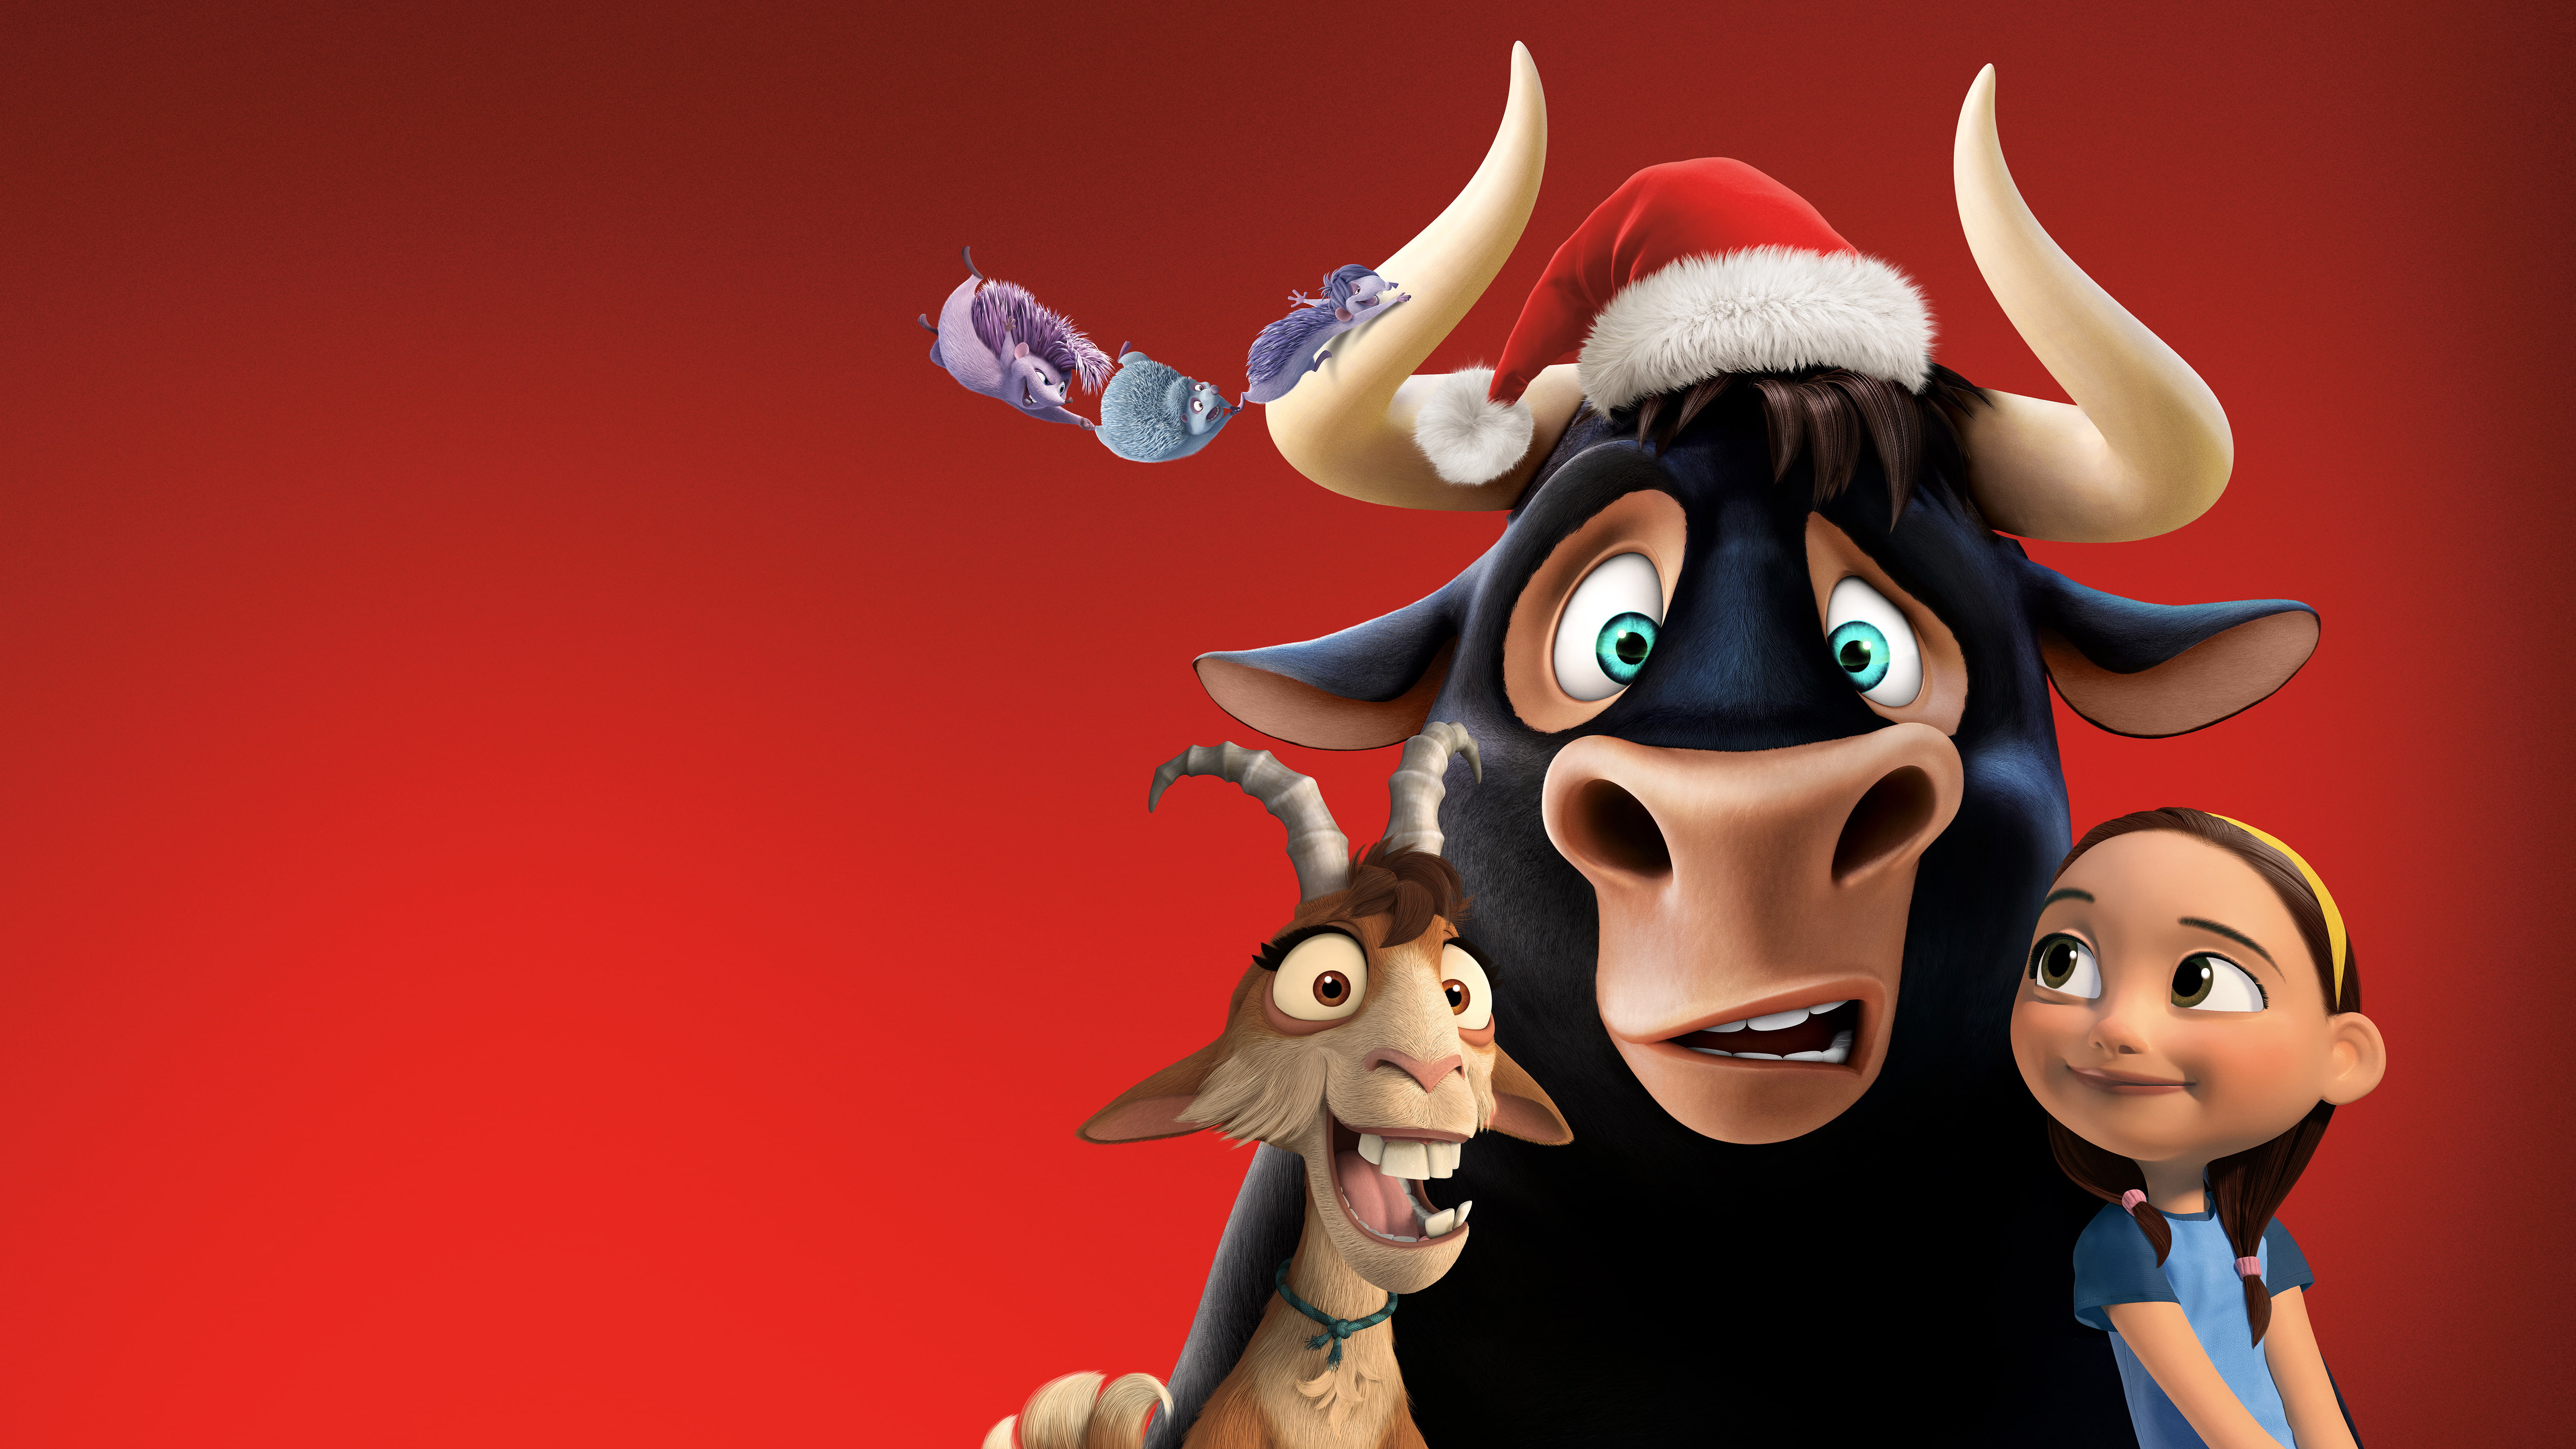 Ferdinand The Bull movie poster, Animation, 2017, 4K